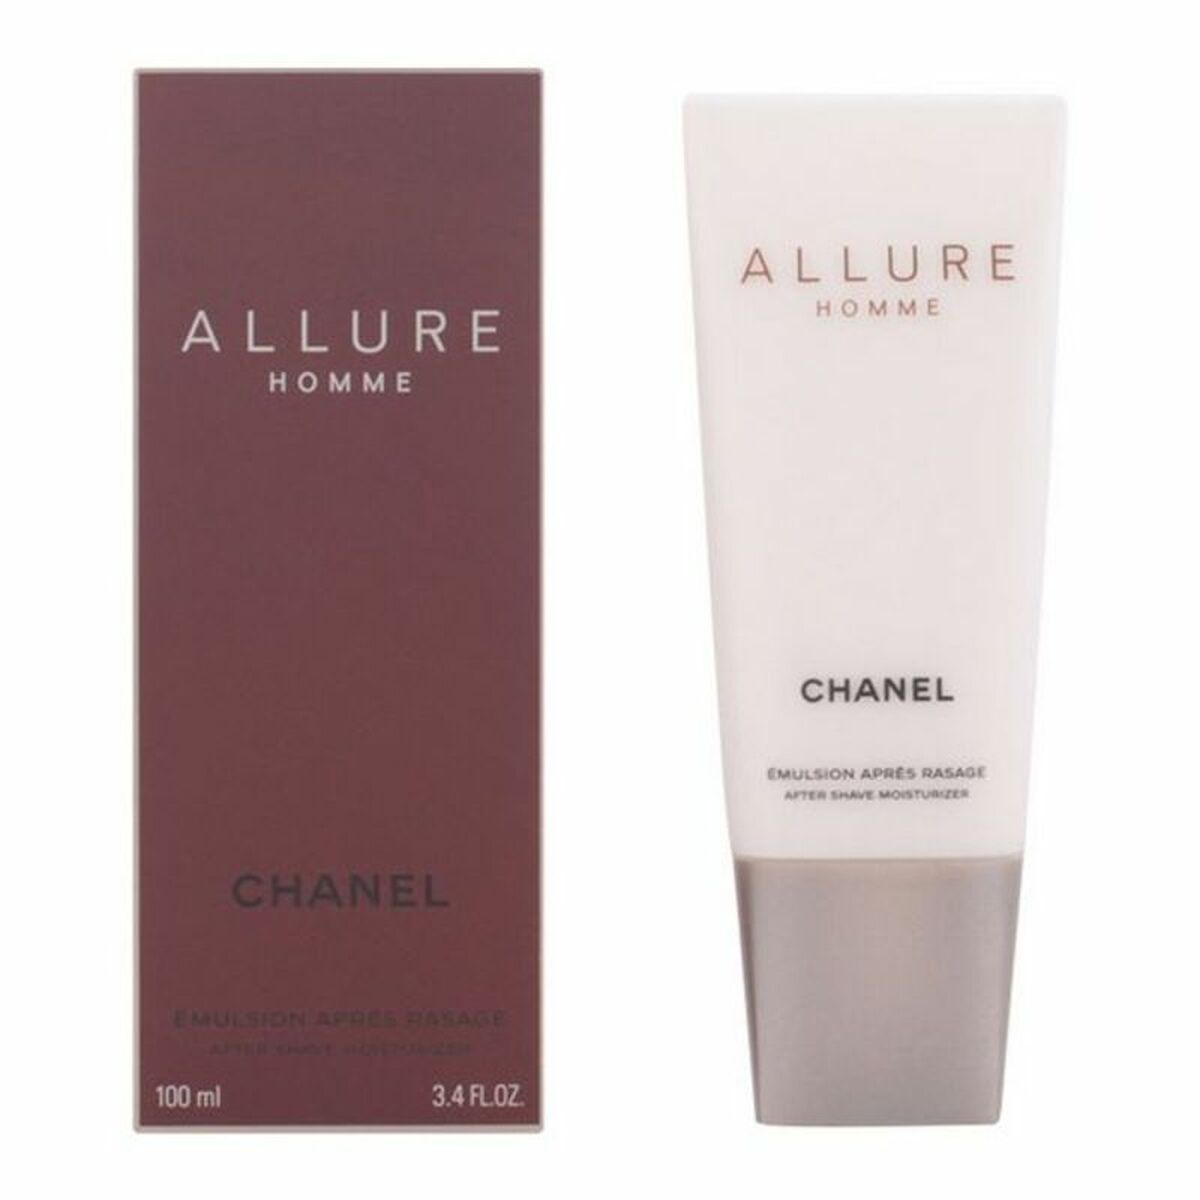 Kaufe Aftershave-Balsam Chanel Allure Homme 100 ml bei AWK Flagship um € 77.00